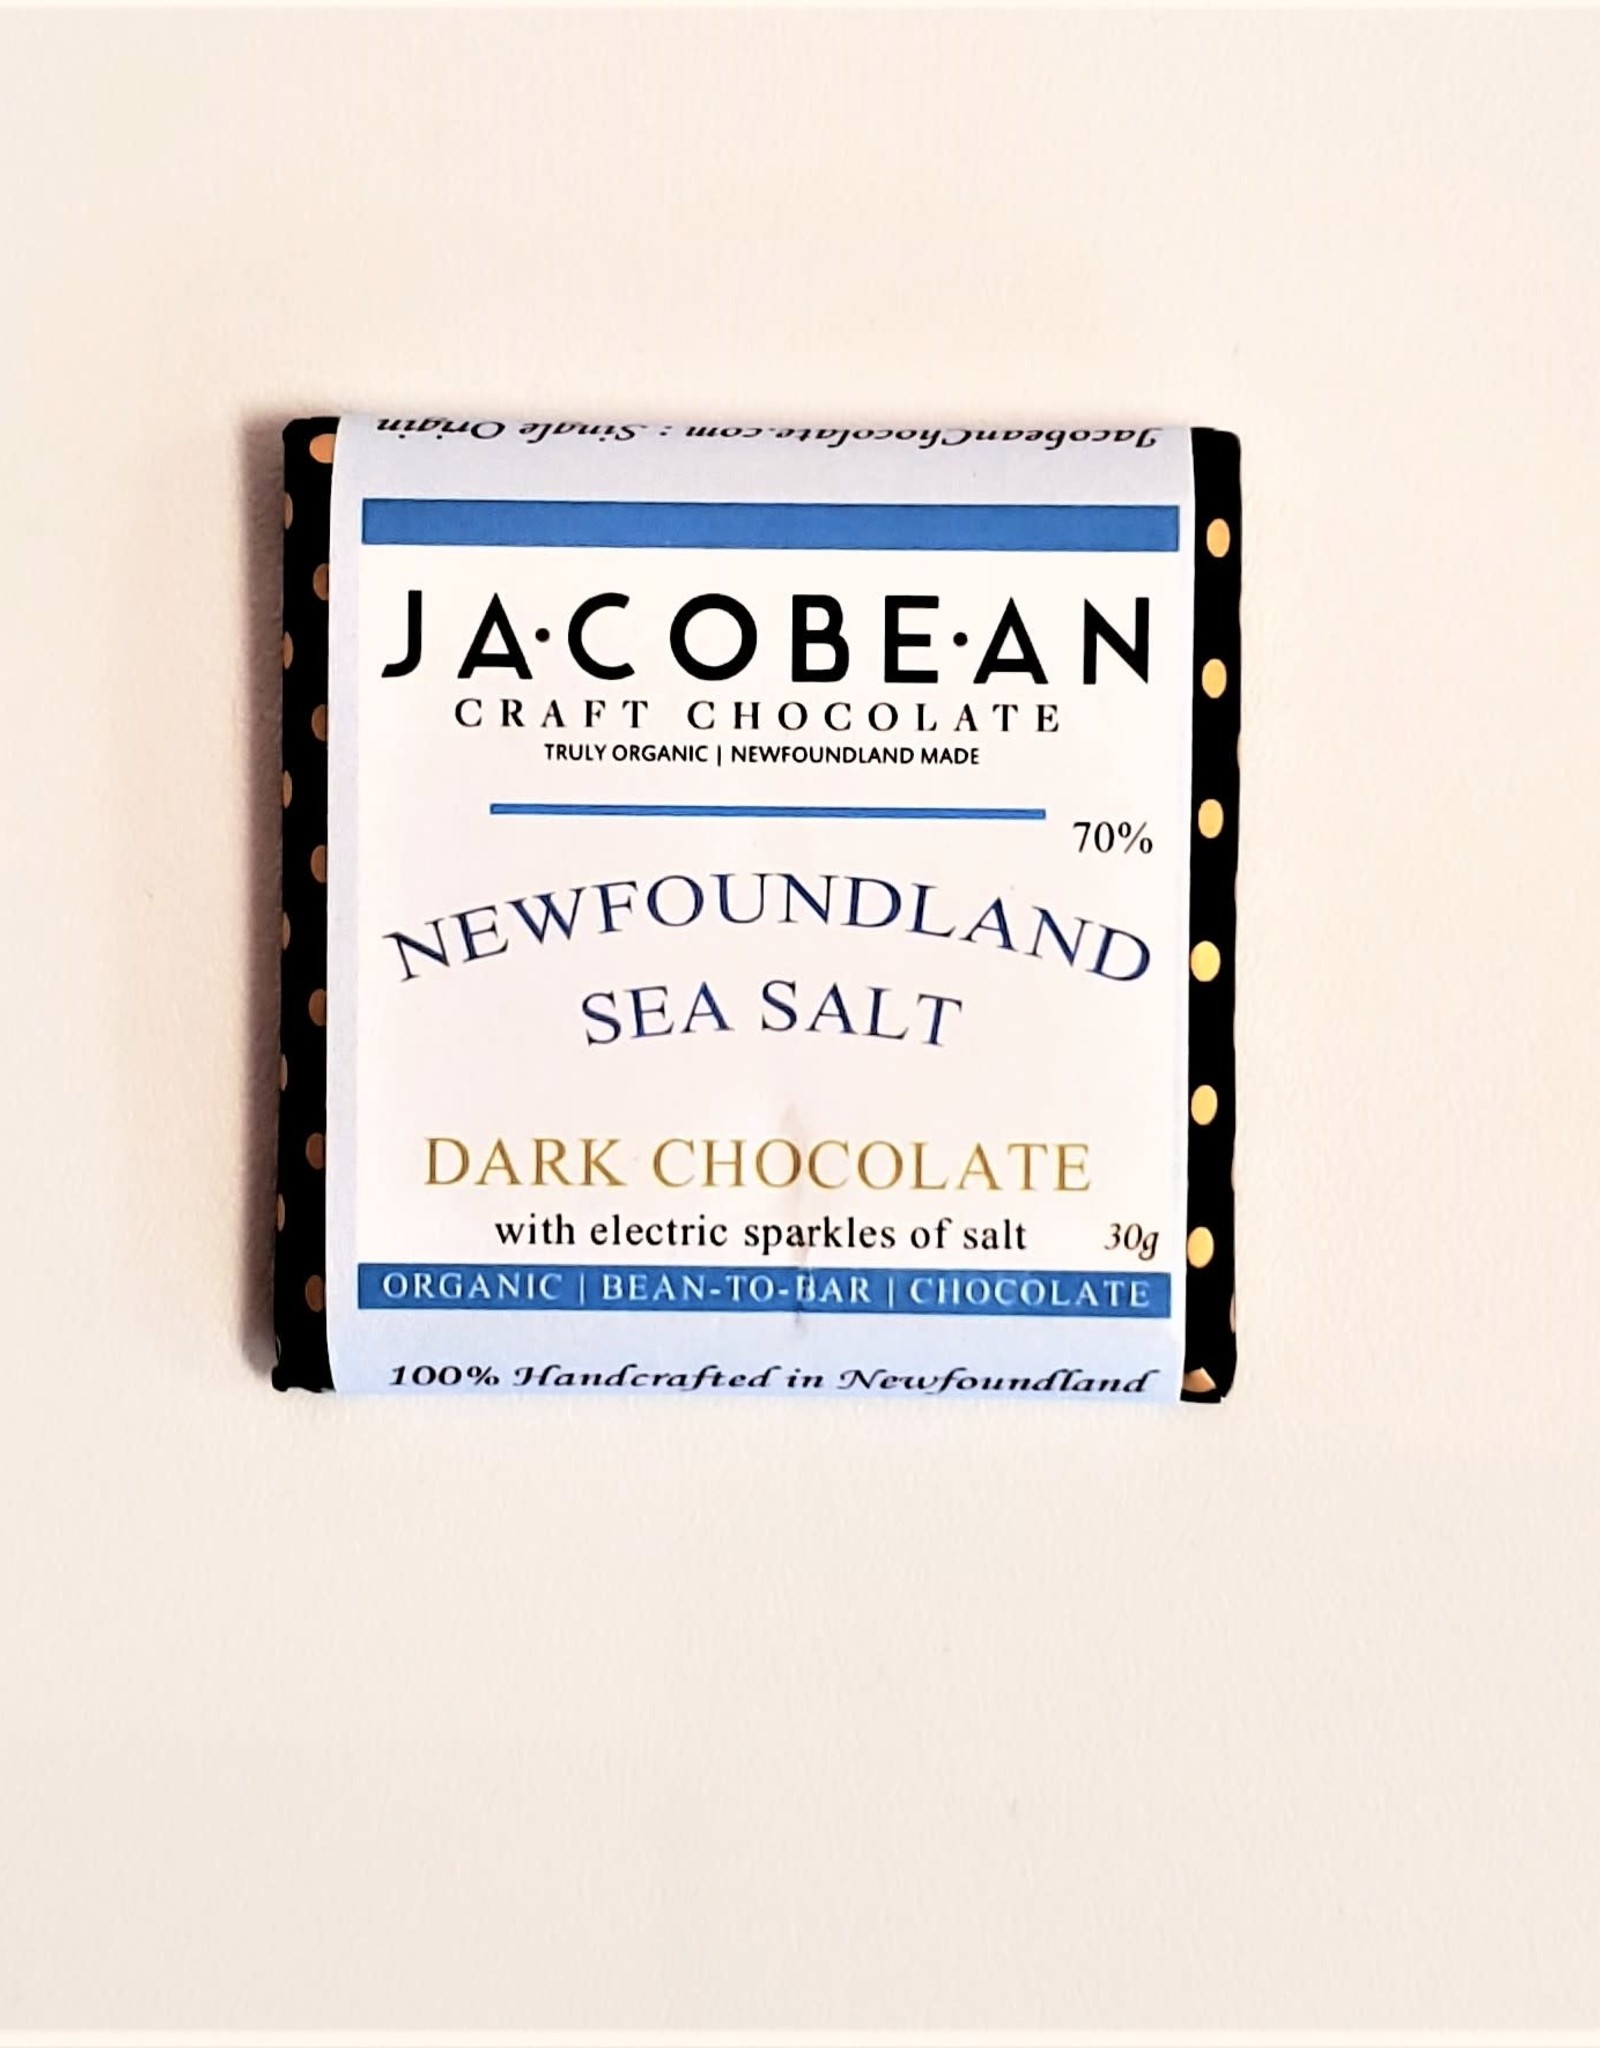 Jacobean Jacobean - Dark Chocolate, NL Sea Salt (30g)